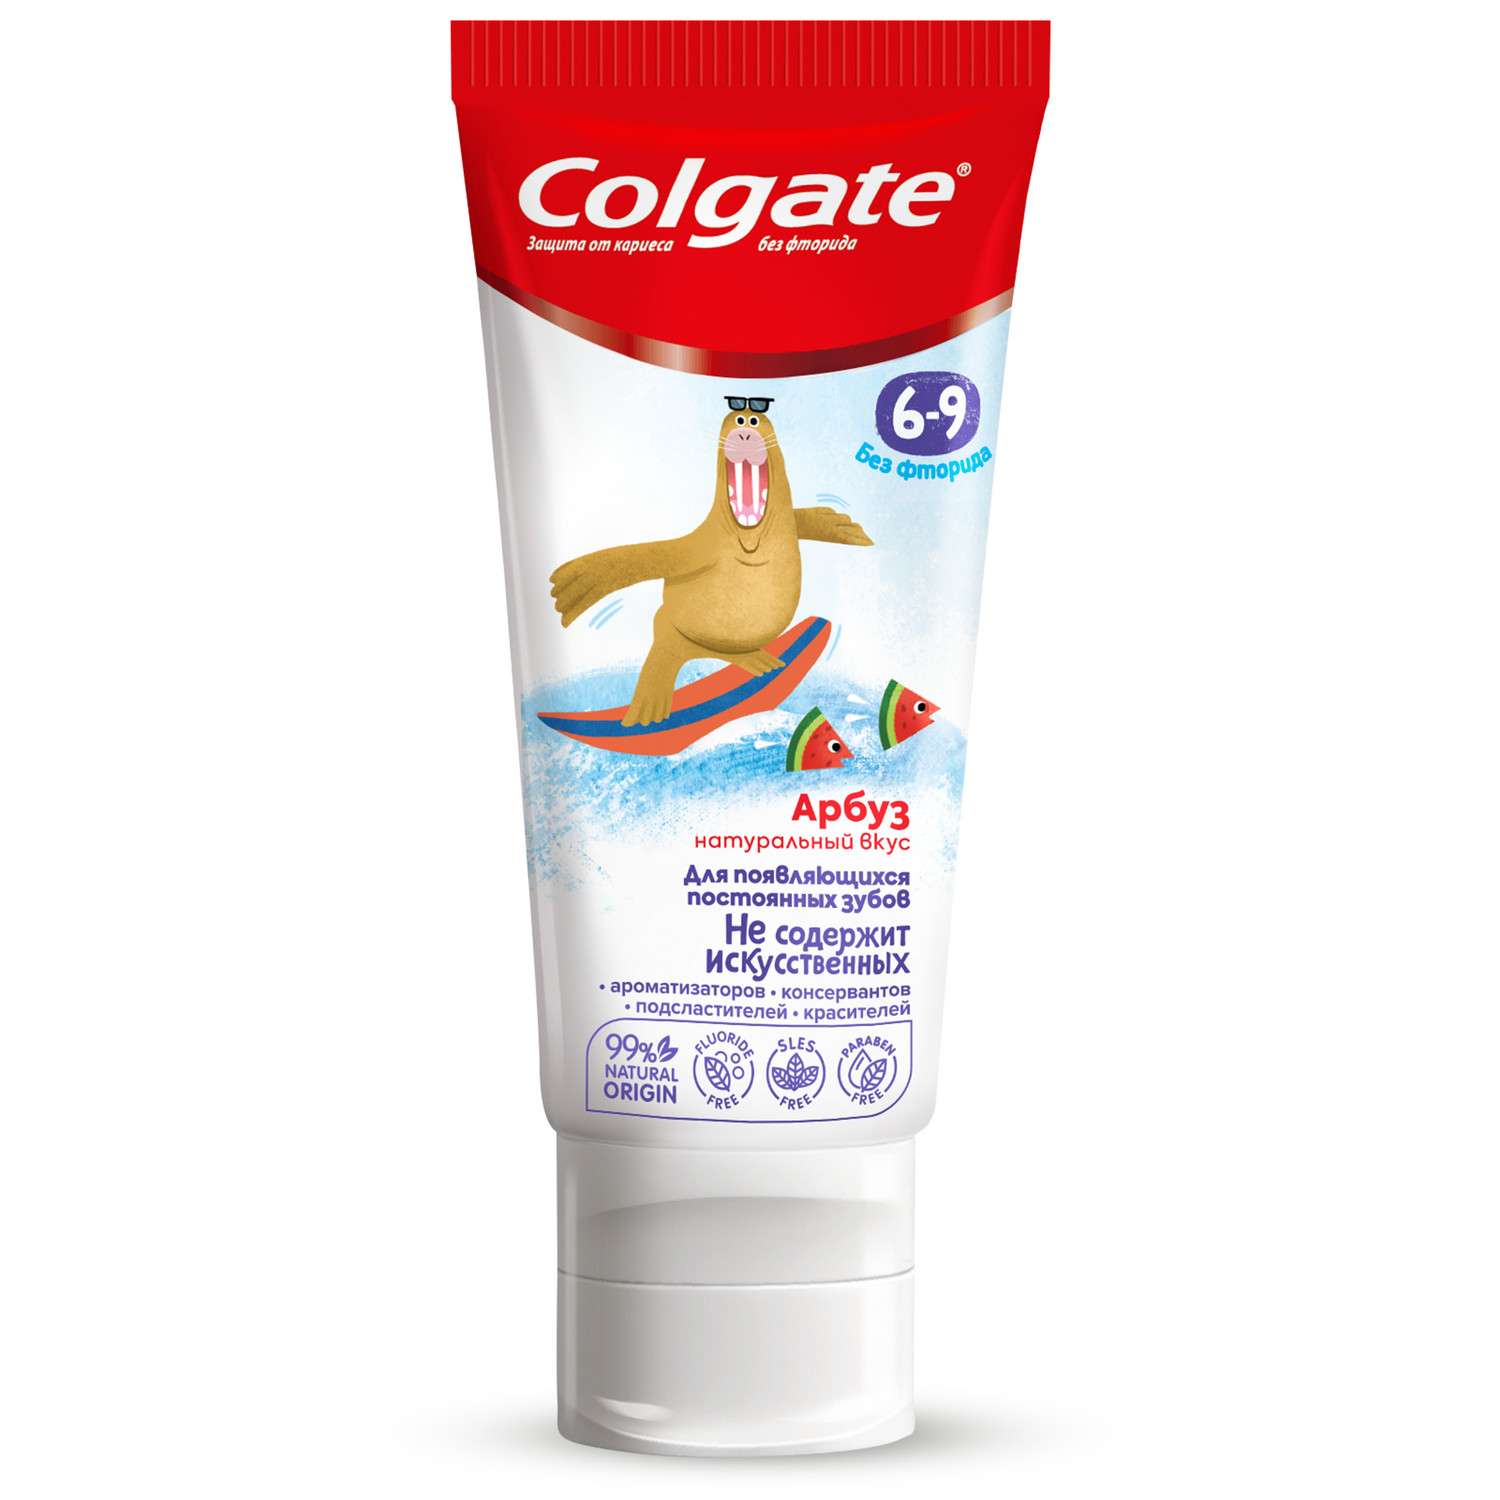 Зубная паста Colgate без фторида Арбуз 6-9лет 60мл - фото 2